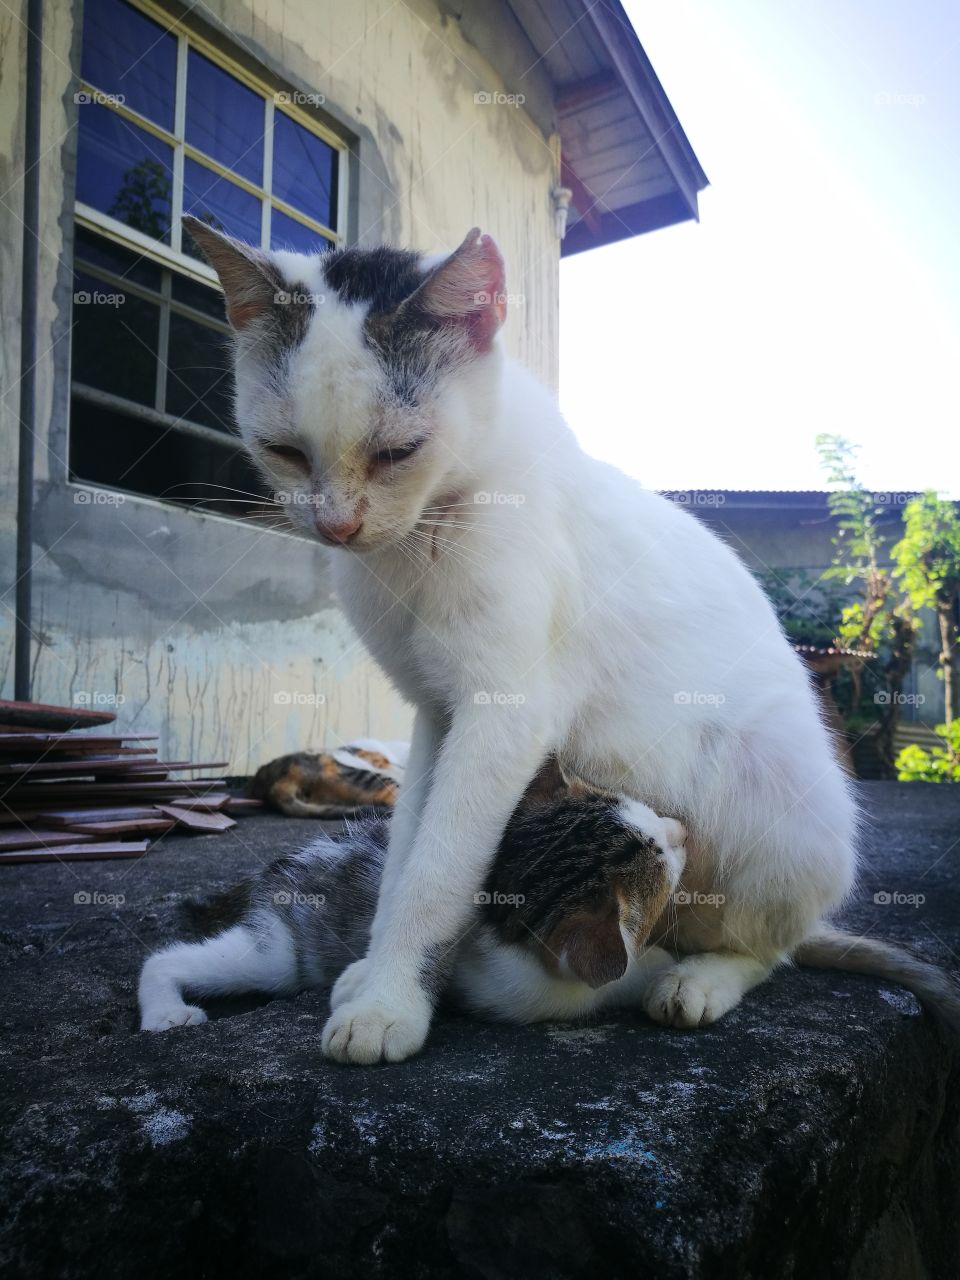 cat feeding baby kitty